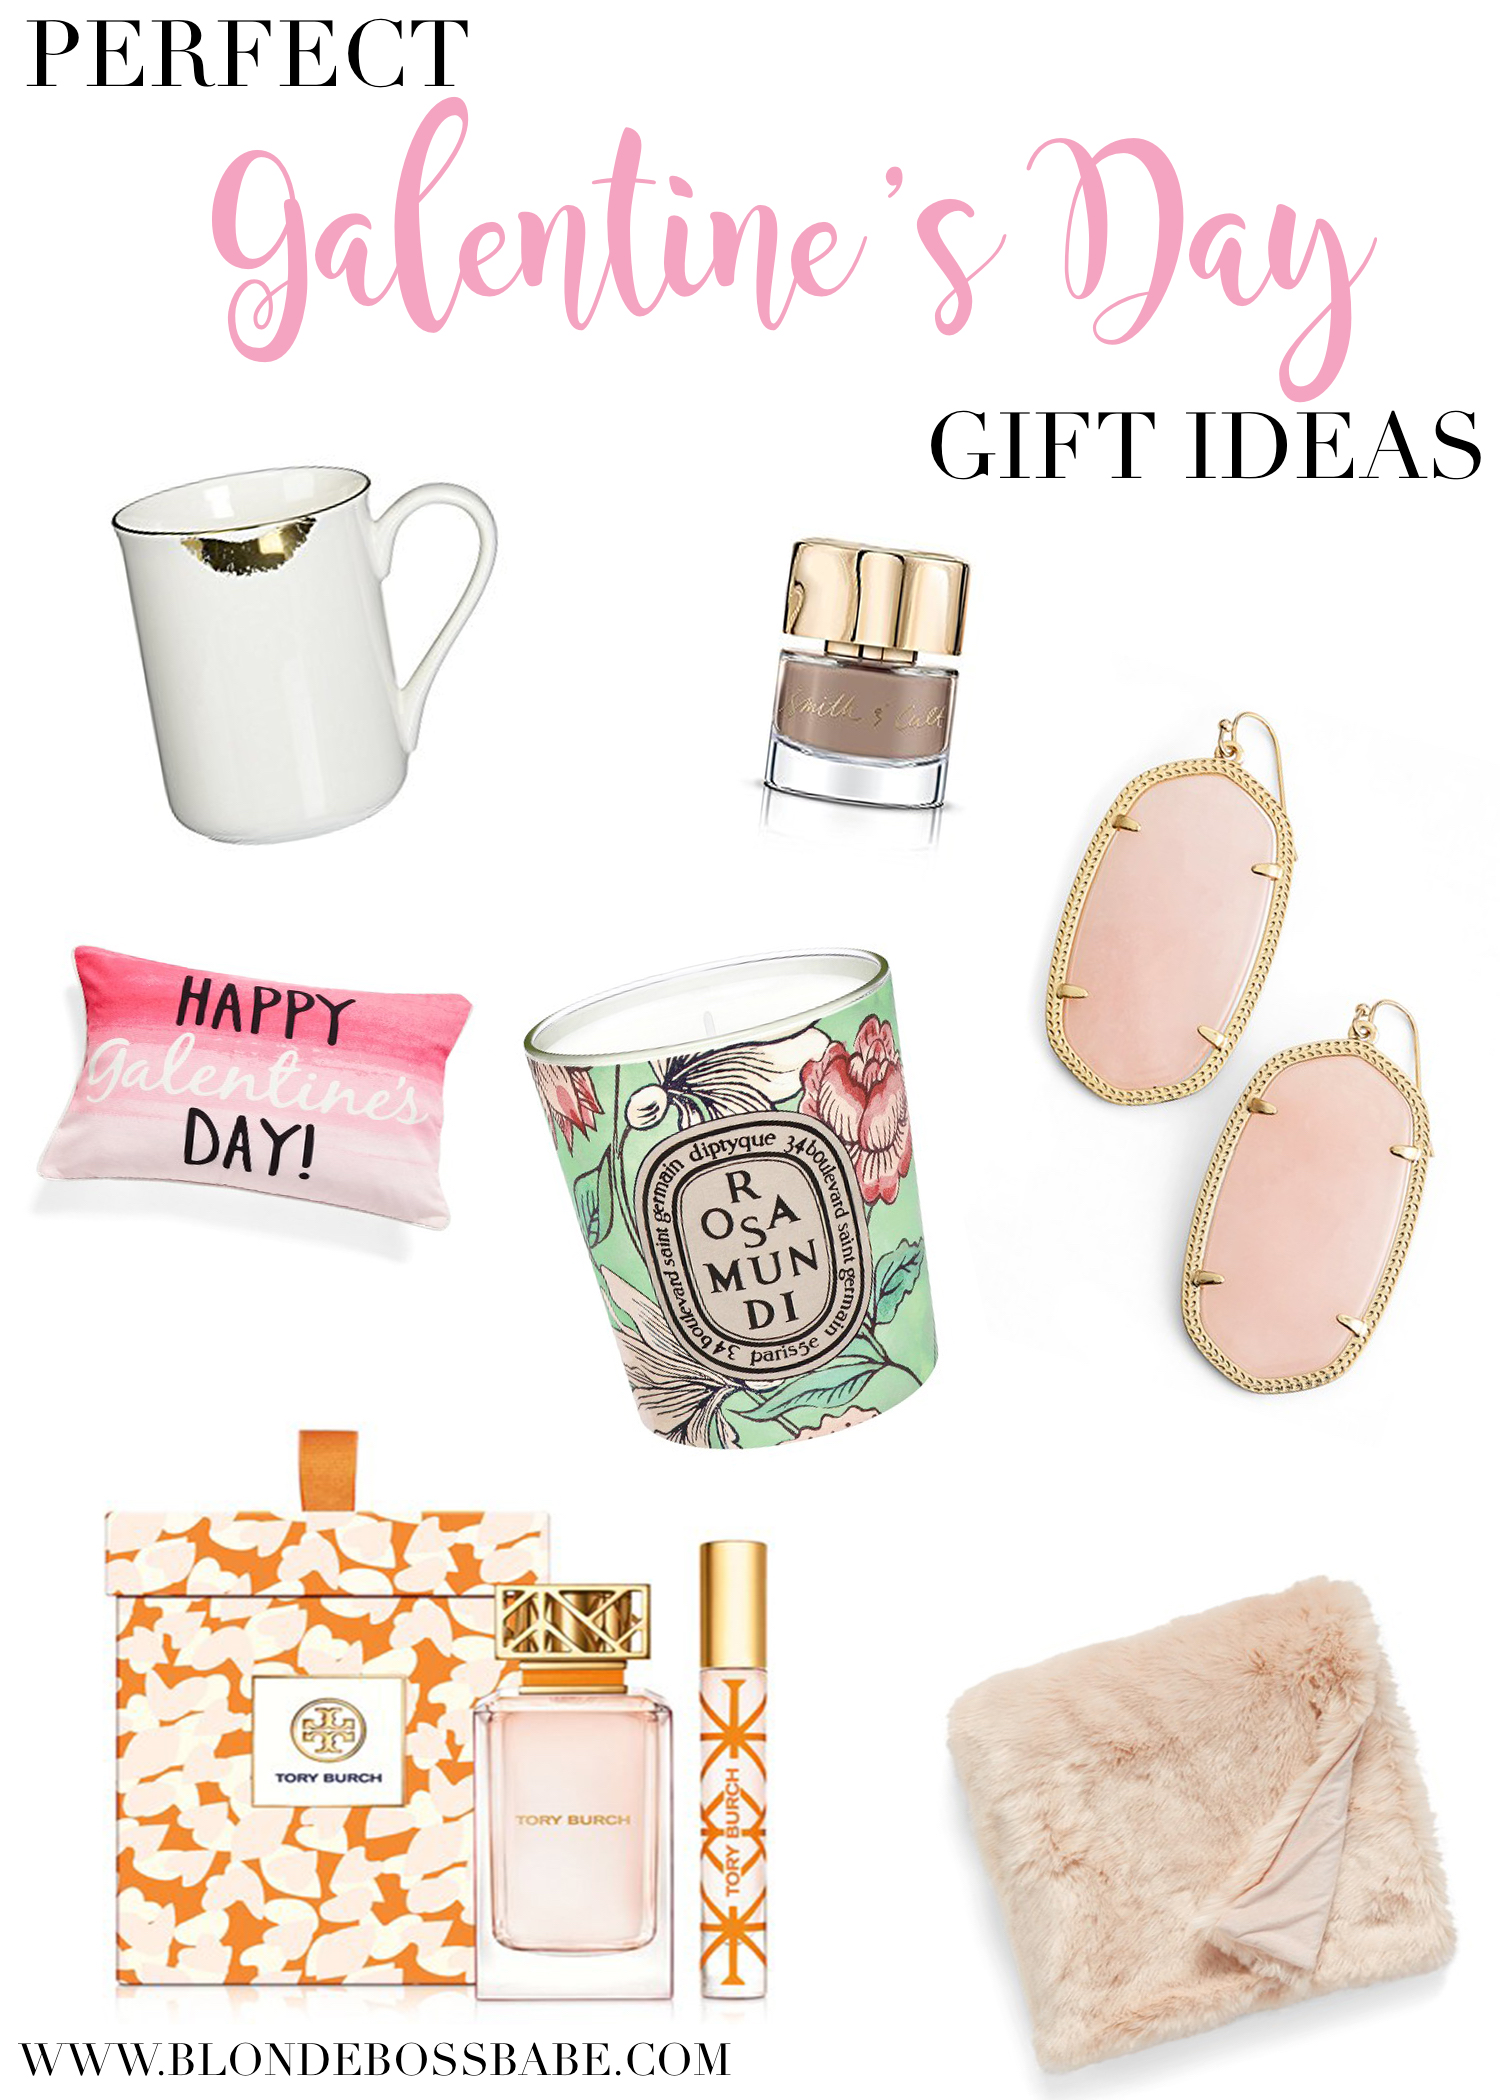 Top Gifts for Galentine's Day - Malia Lynn Blog